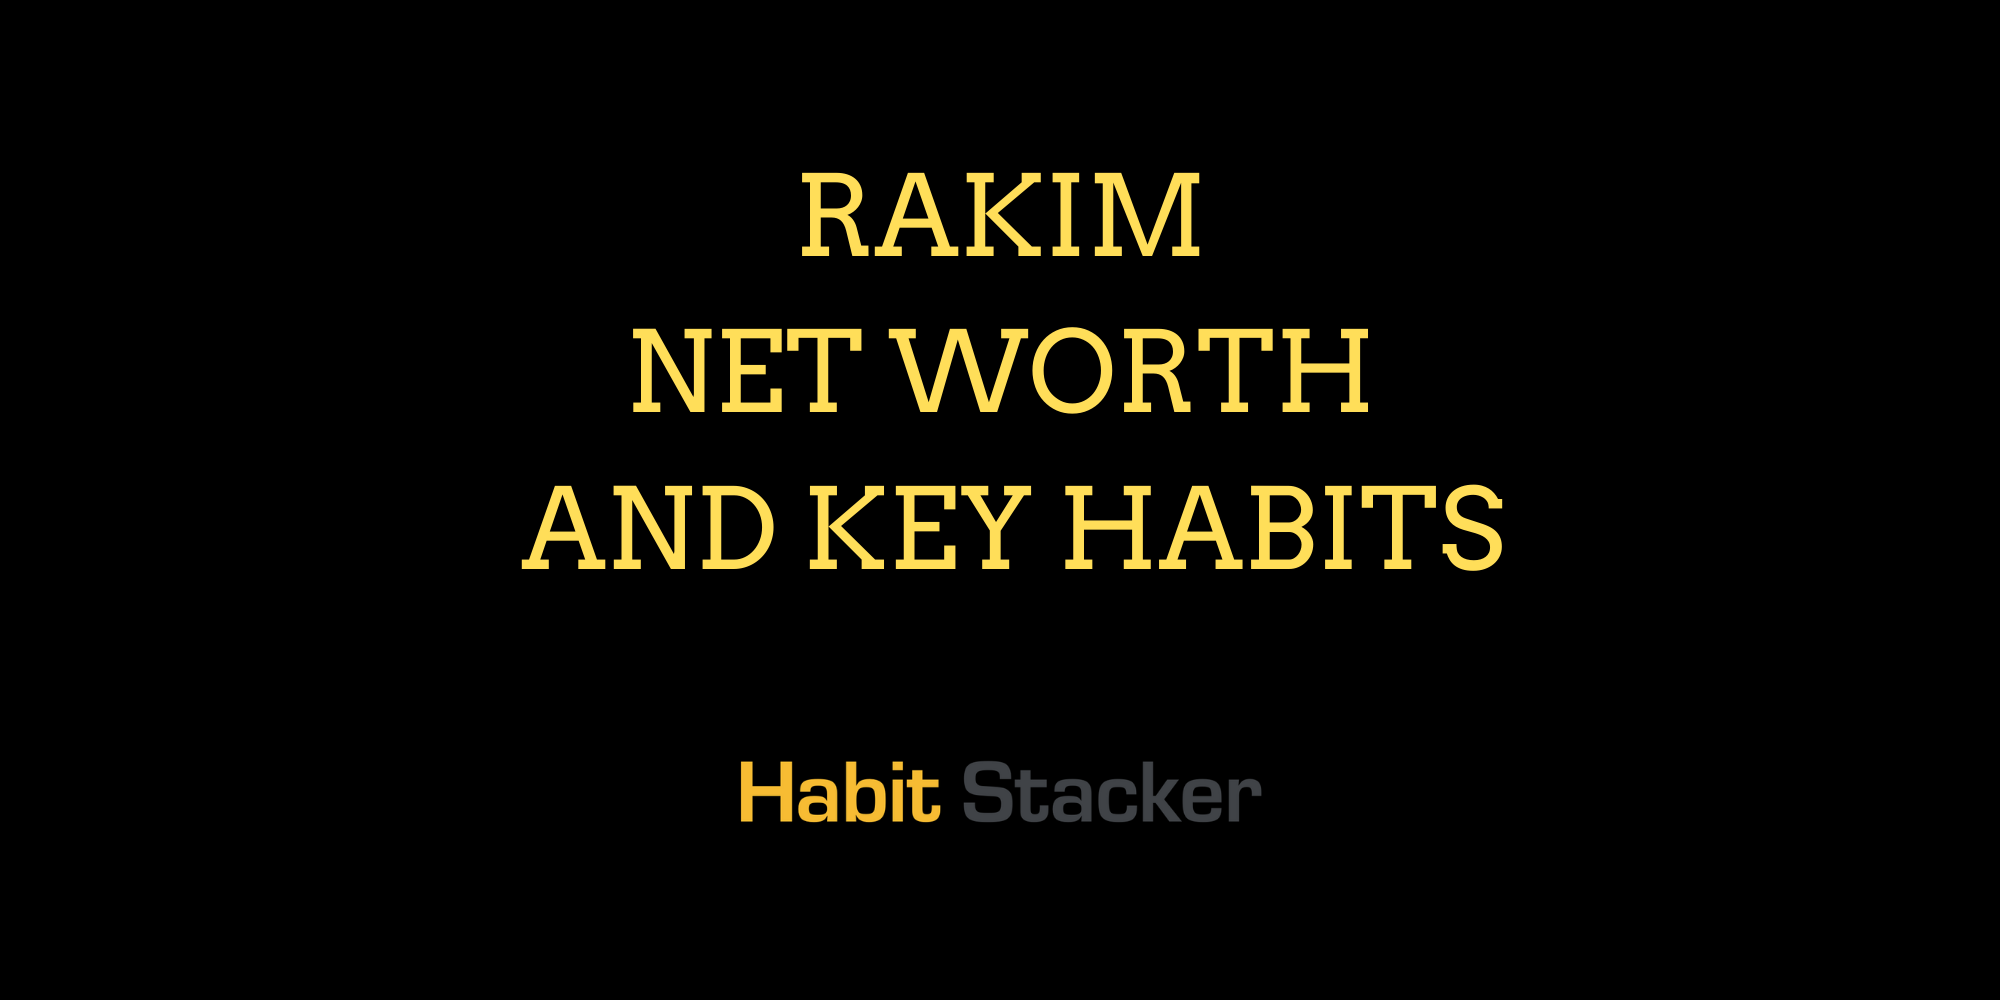 Rakim Net Worth And Key Habits